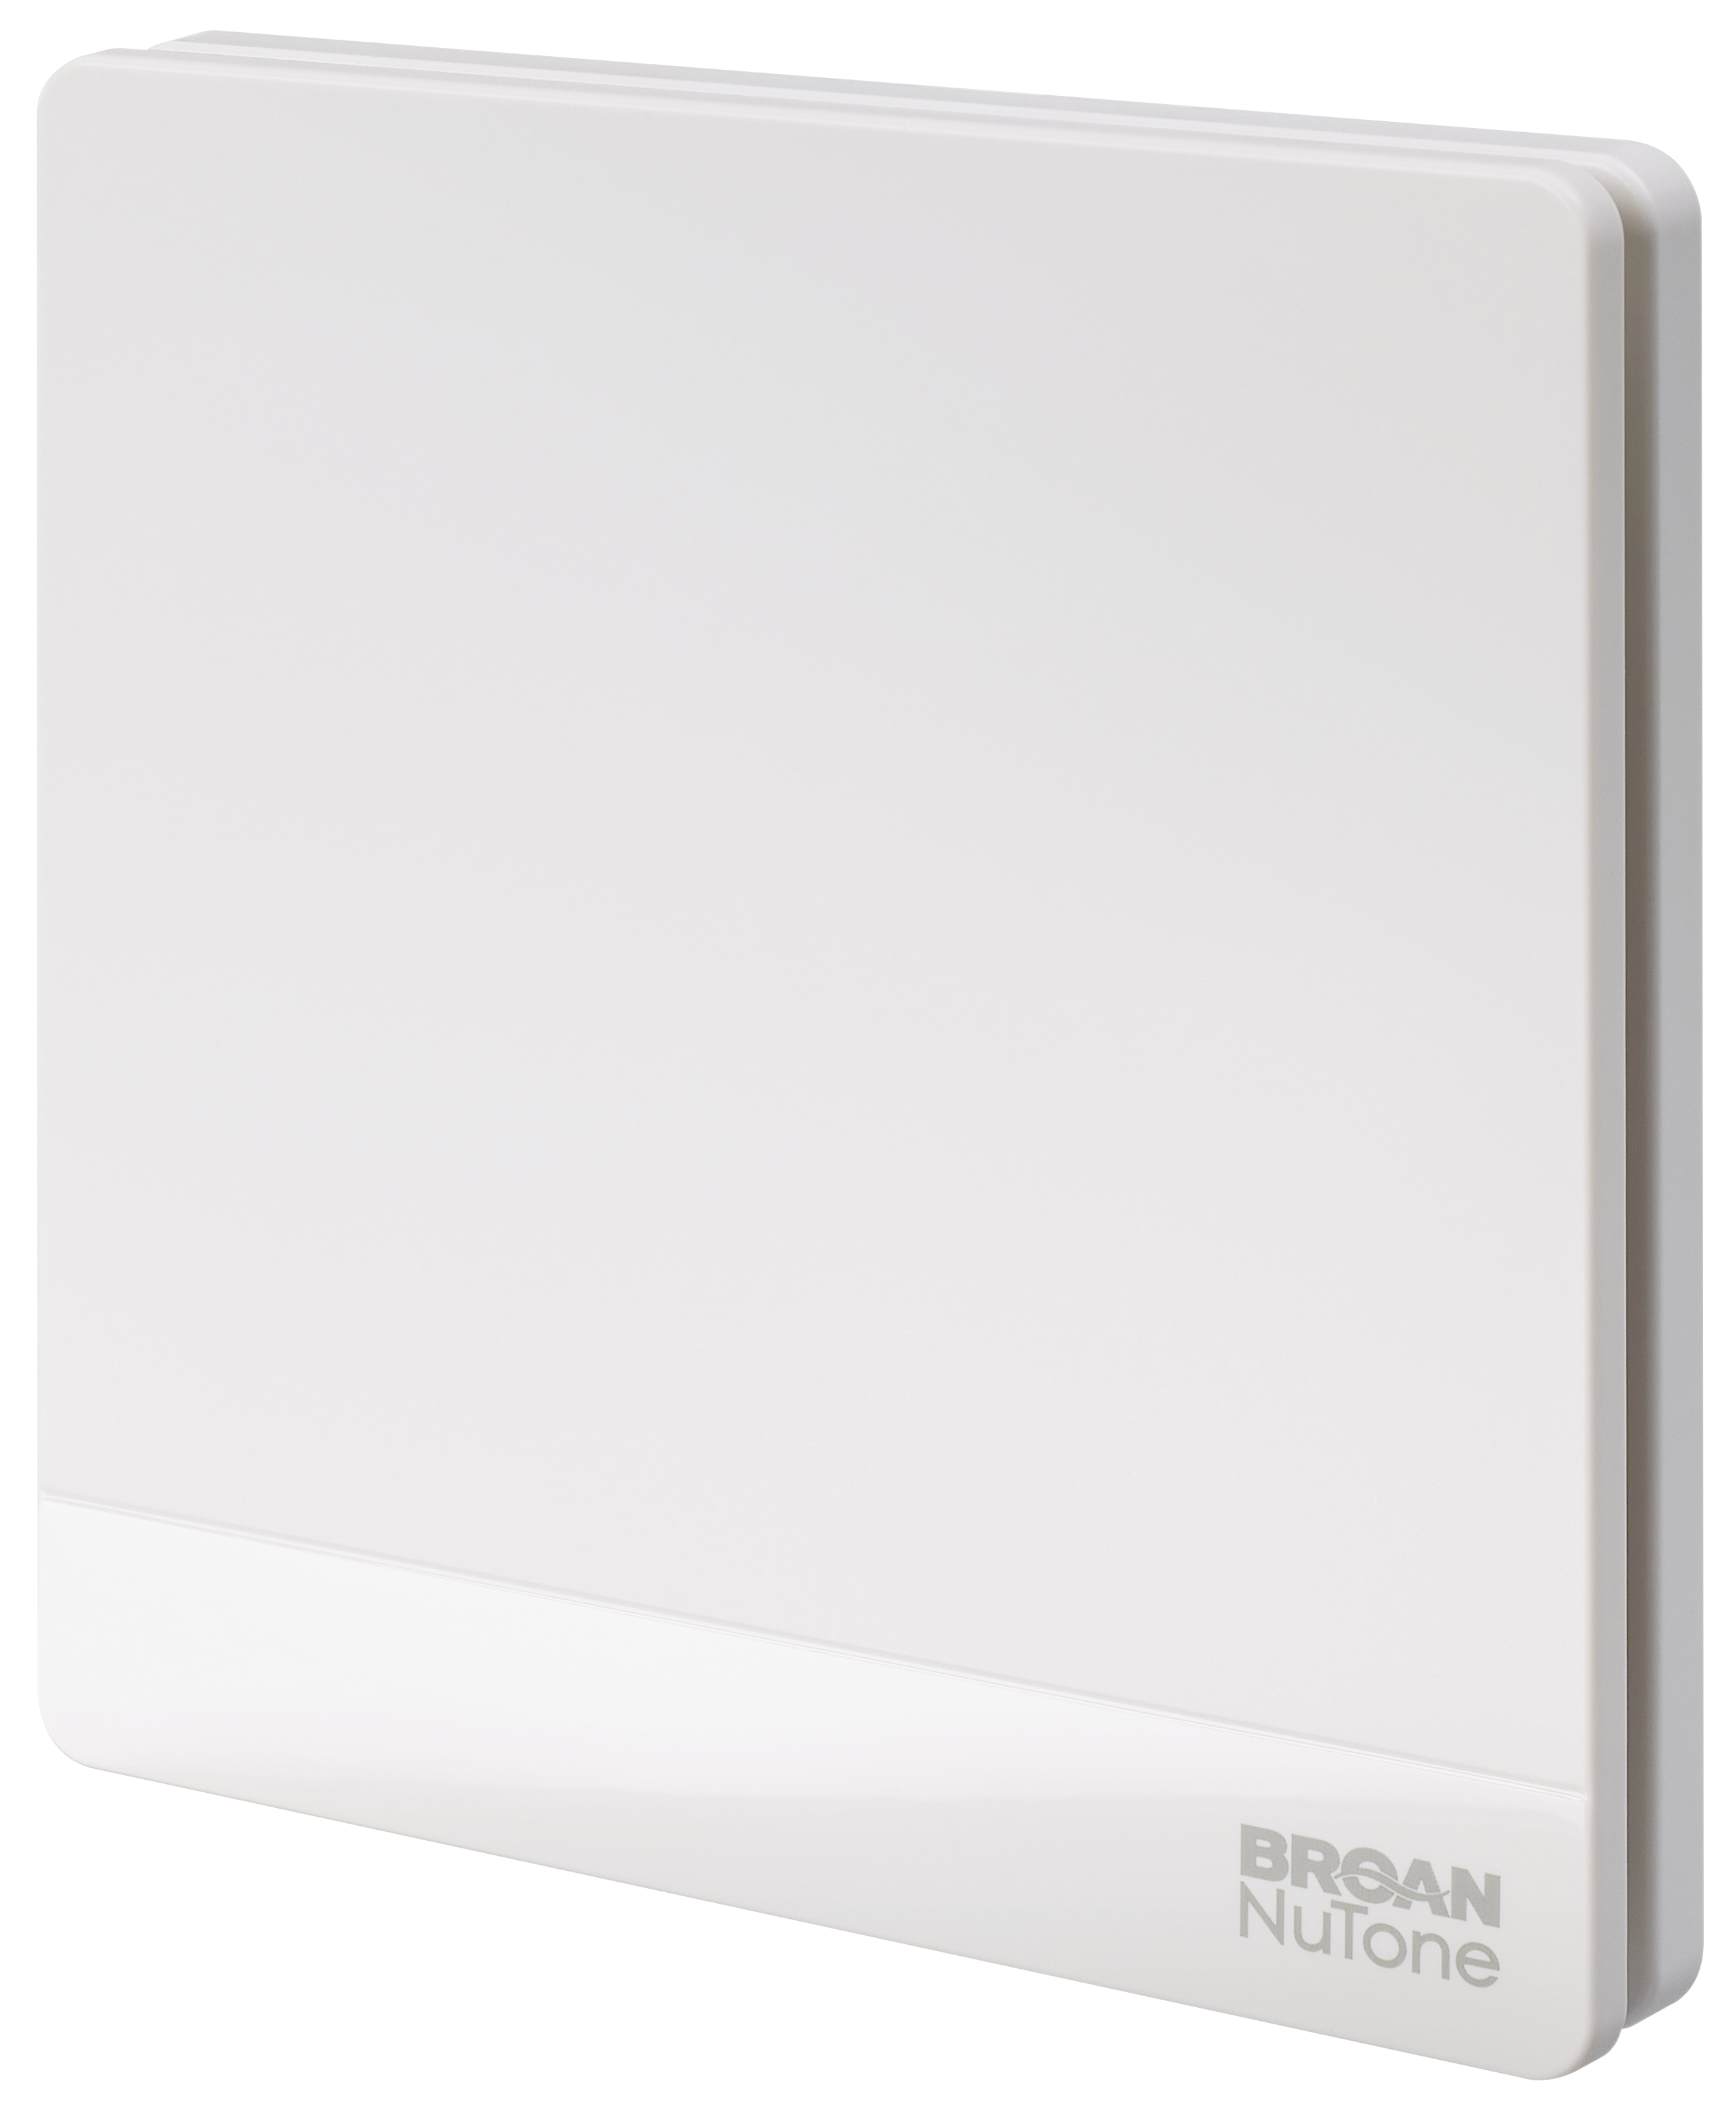 Overture Smart Air Quality Hardwire Room Sensor | Model BIAQHWRS100